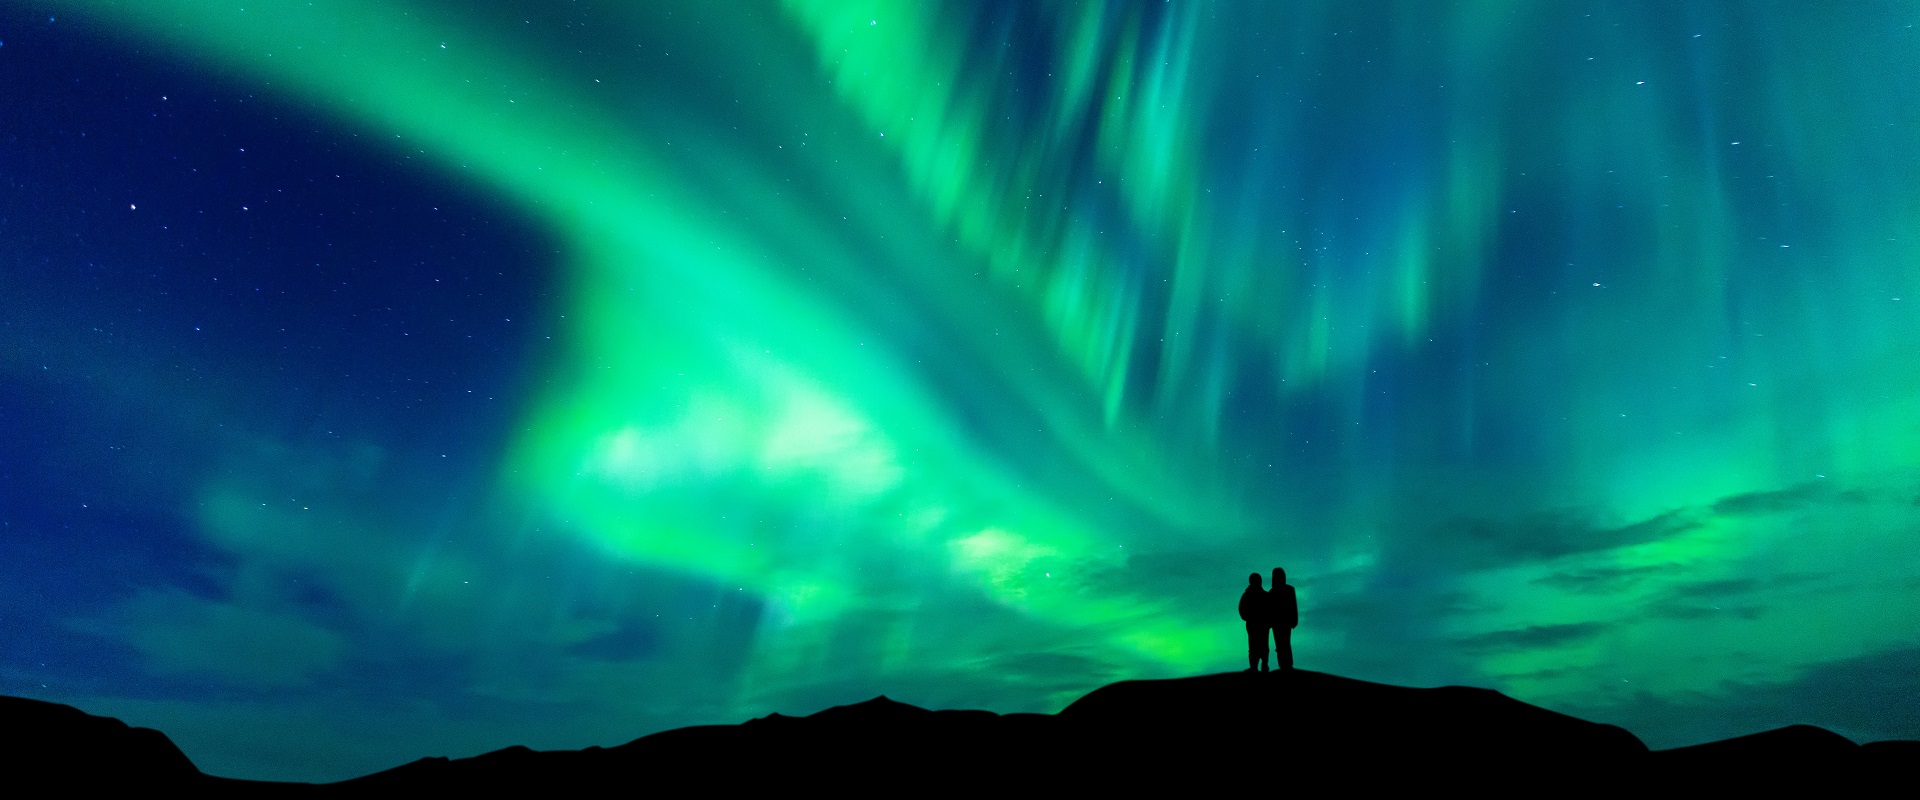 The aurora borealis. Image: iStock